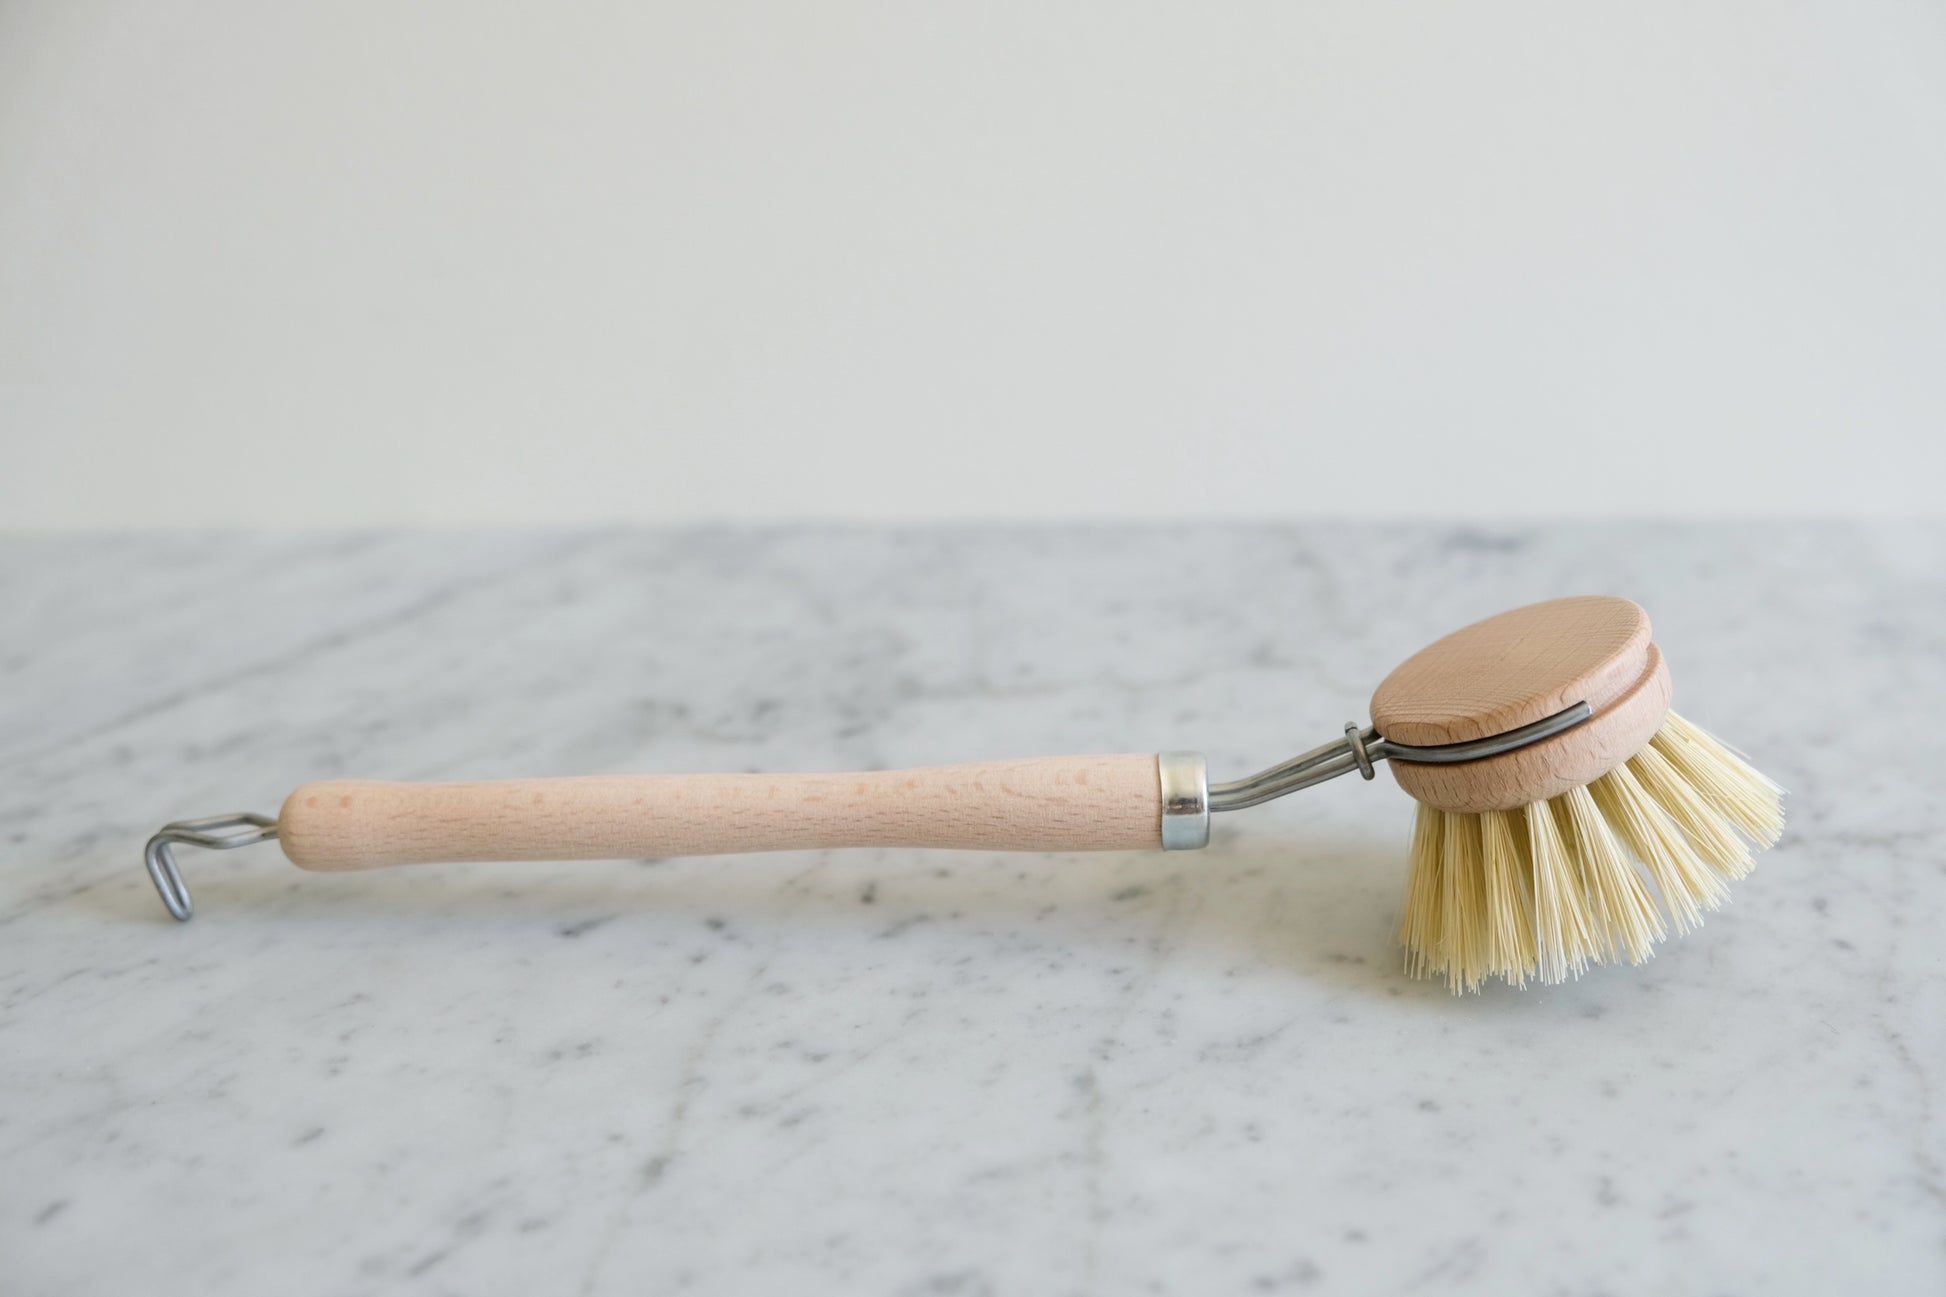 The Better Bristles Compostable Dish Brush